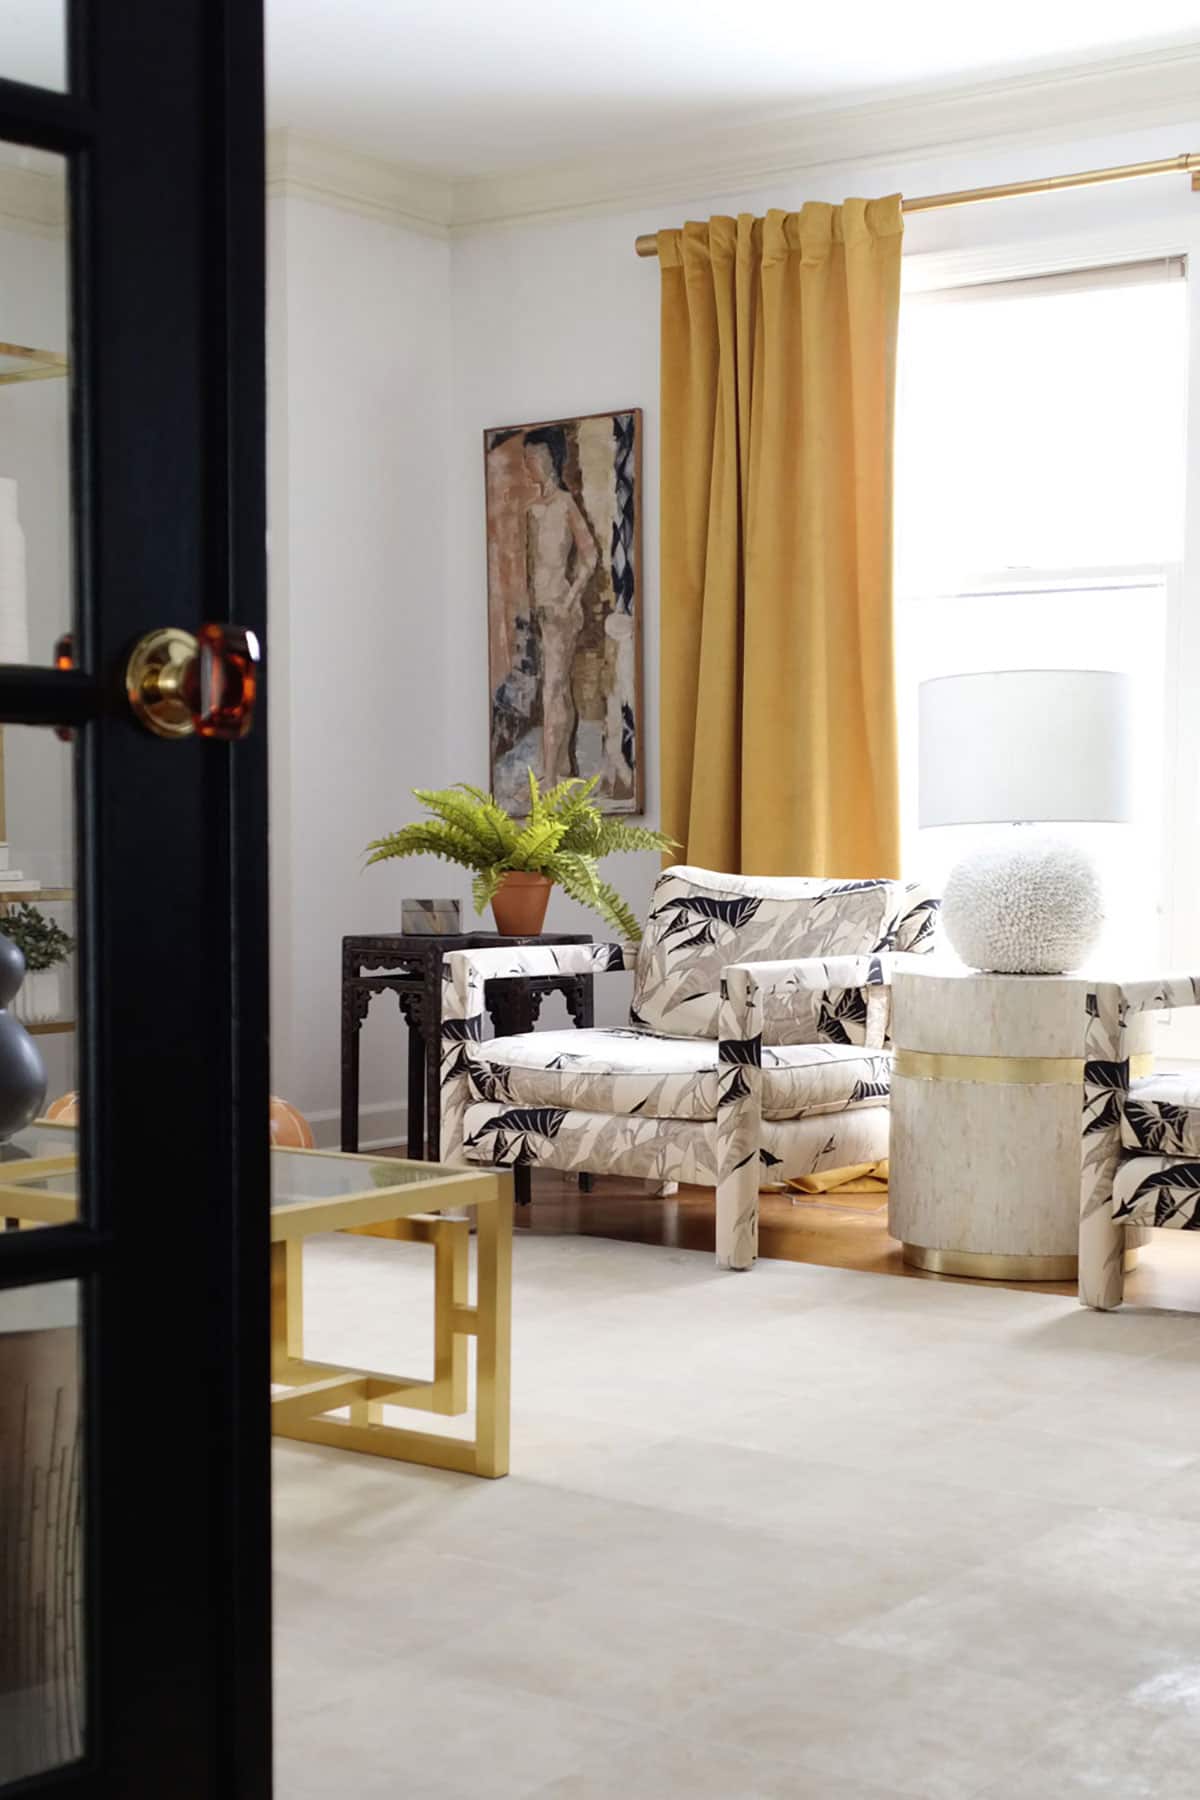 Modern Living Room interior design with vintage decor